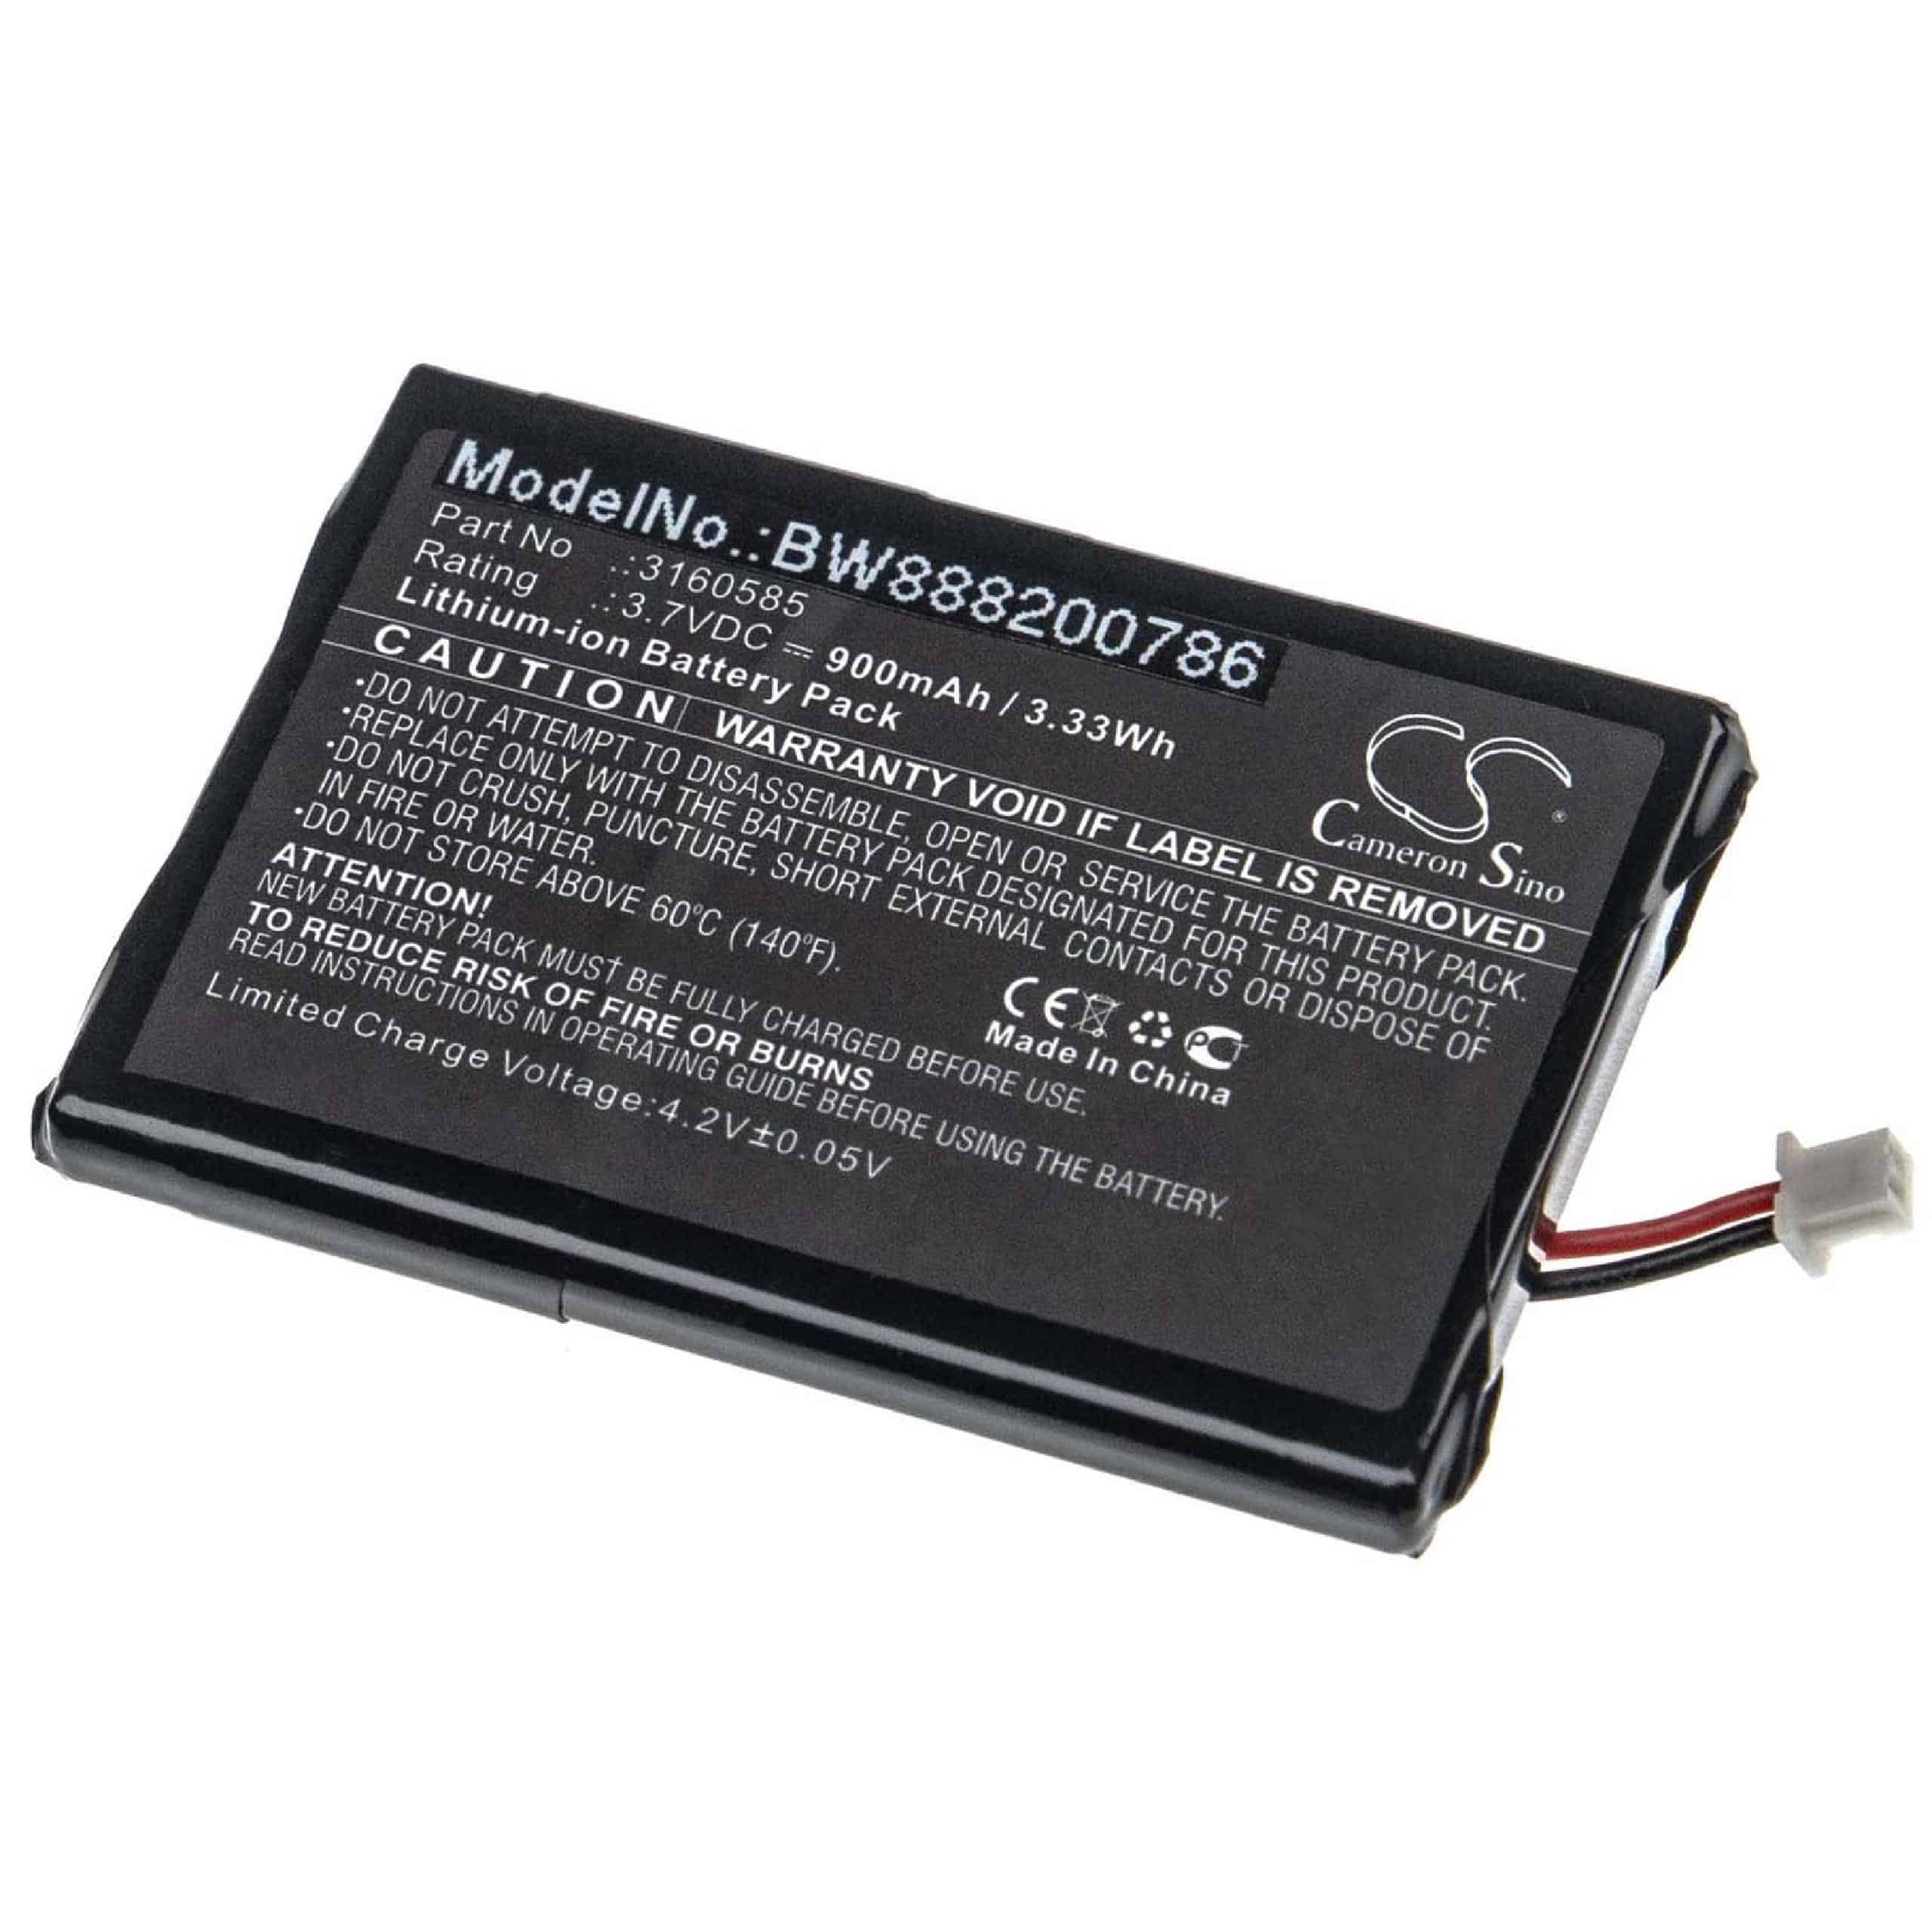 Landline Phone Battery Replacement for Bang & Olufsen 3160585 - 900mAh 3.7V Li-Ion